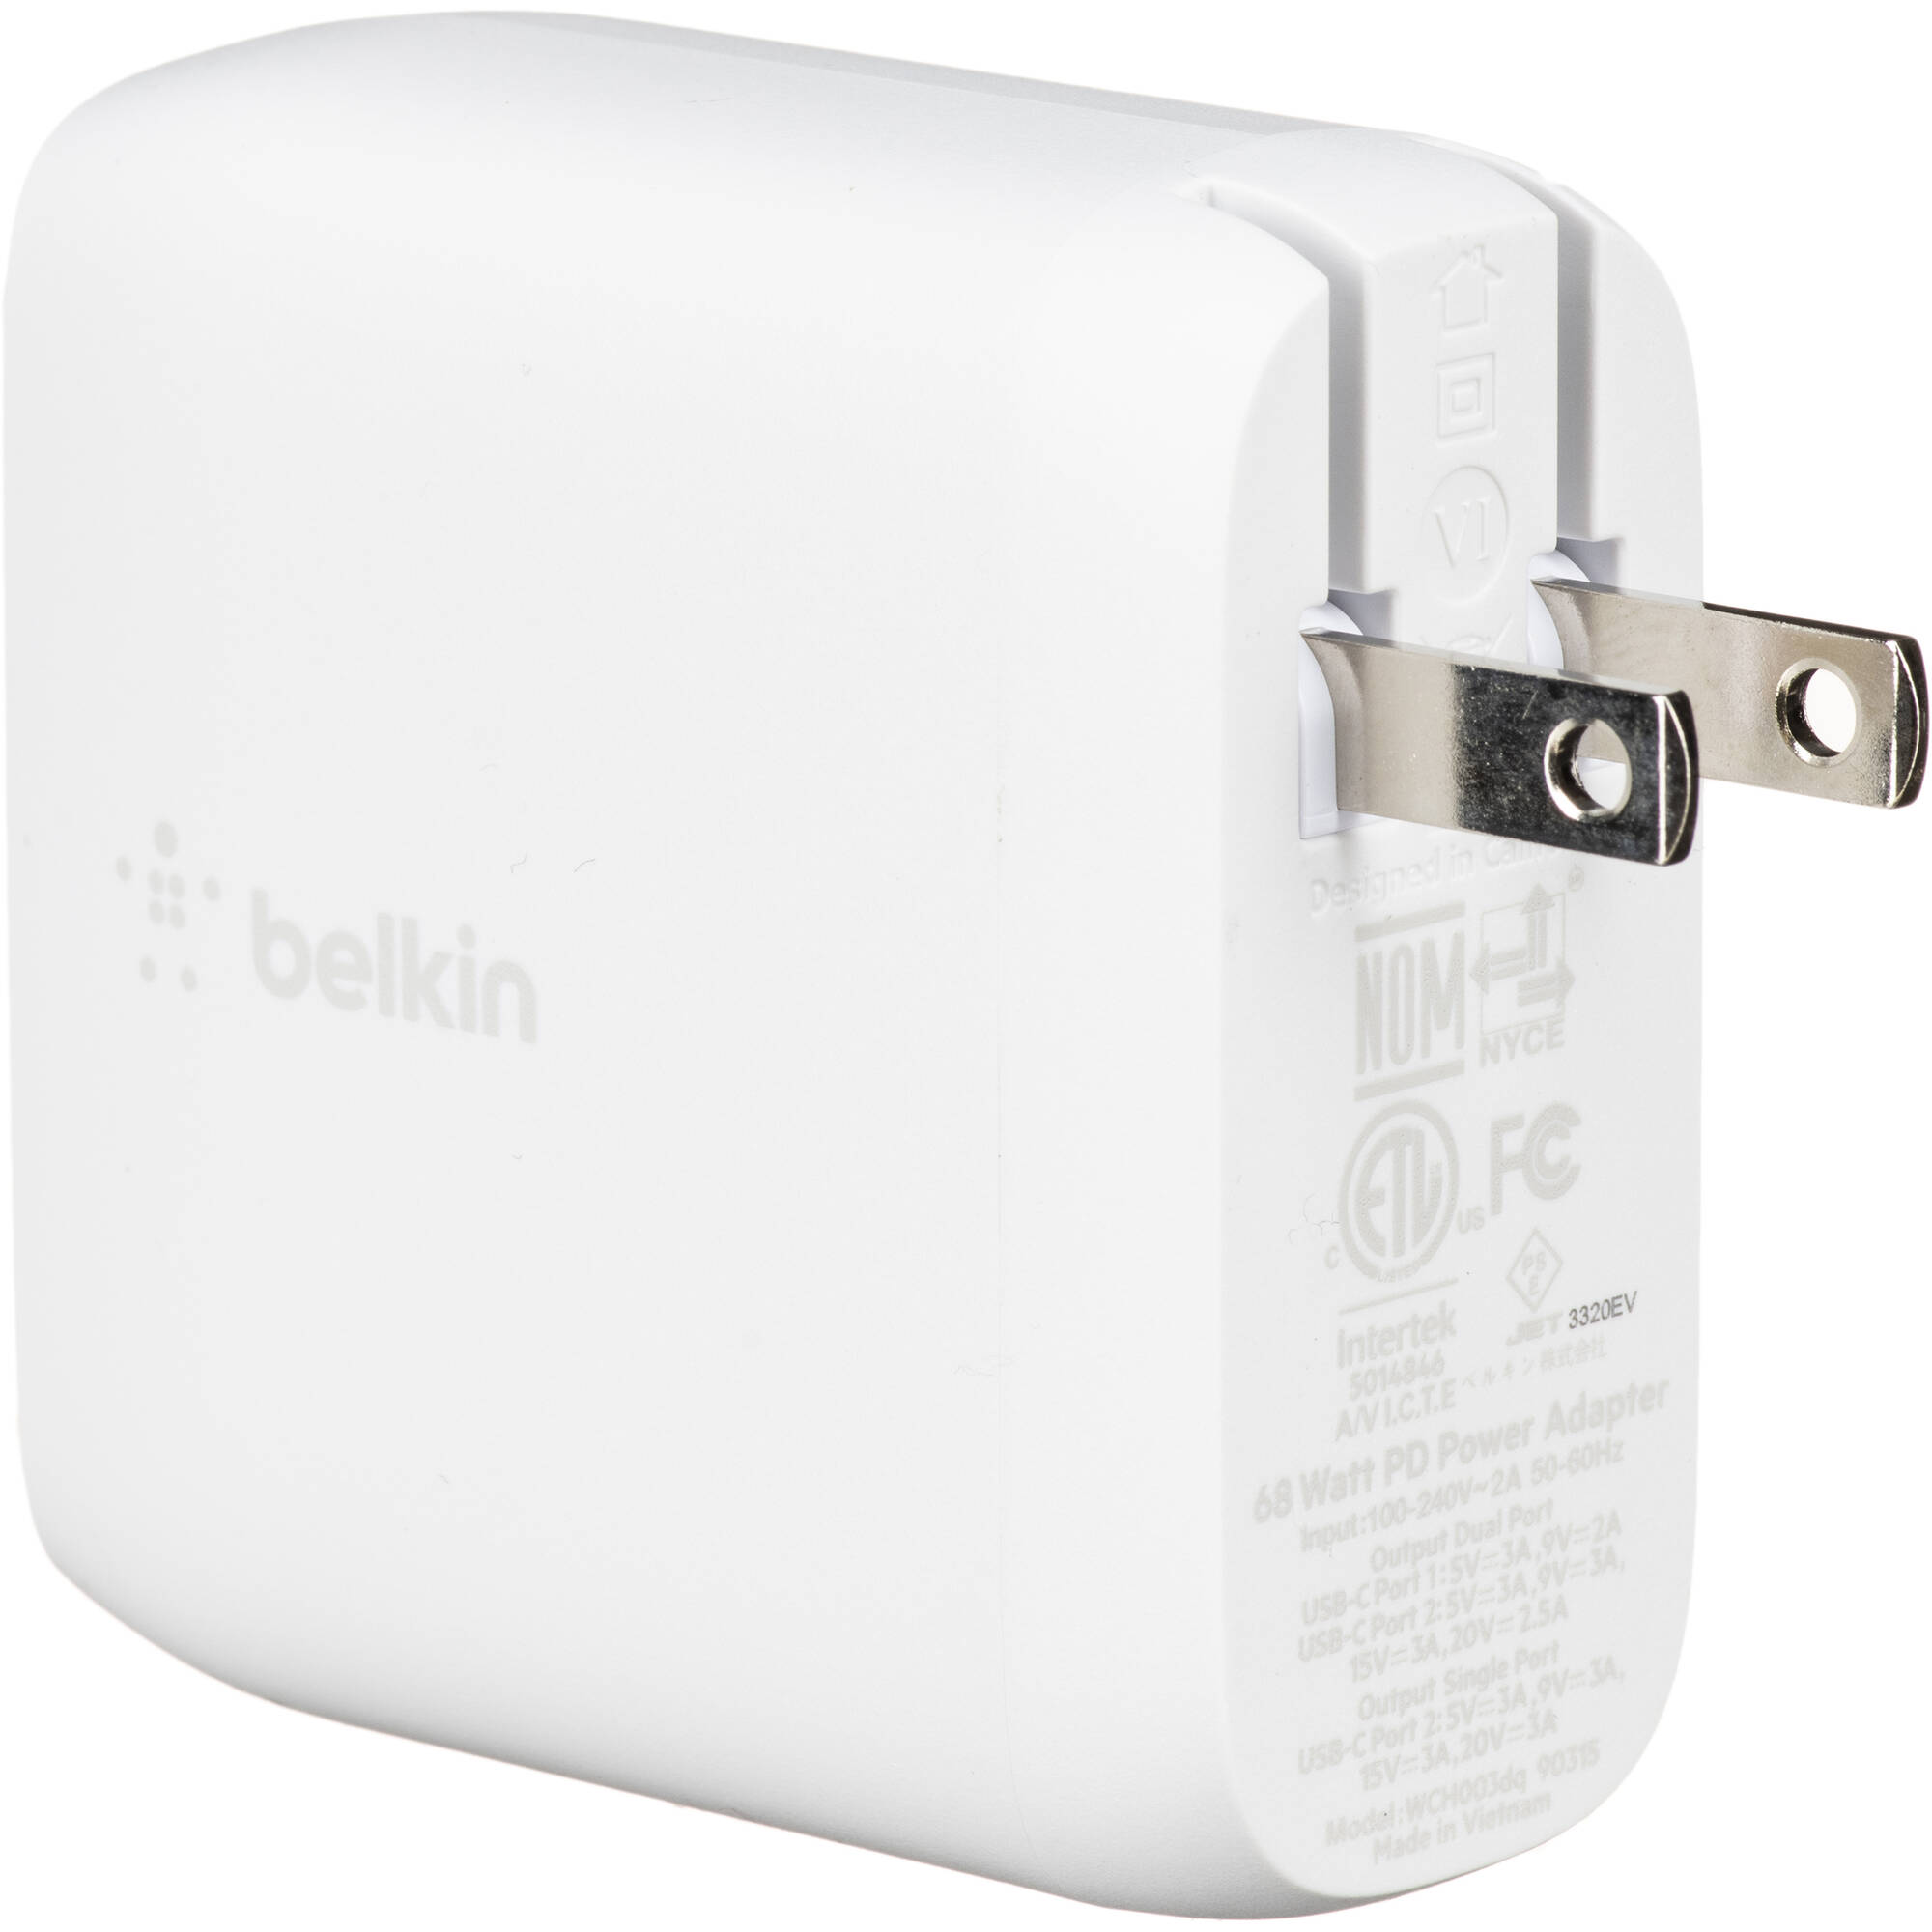 Belkin Cargador USBx2 24W iPhone 12 + Lightning to USB-A WCD001dq1MWH BELKIN